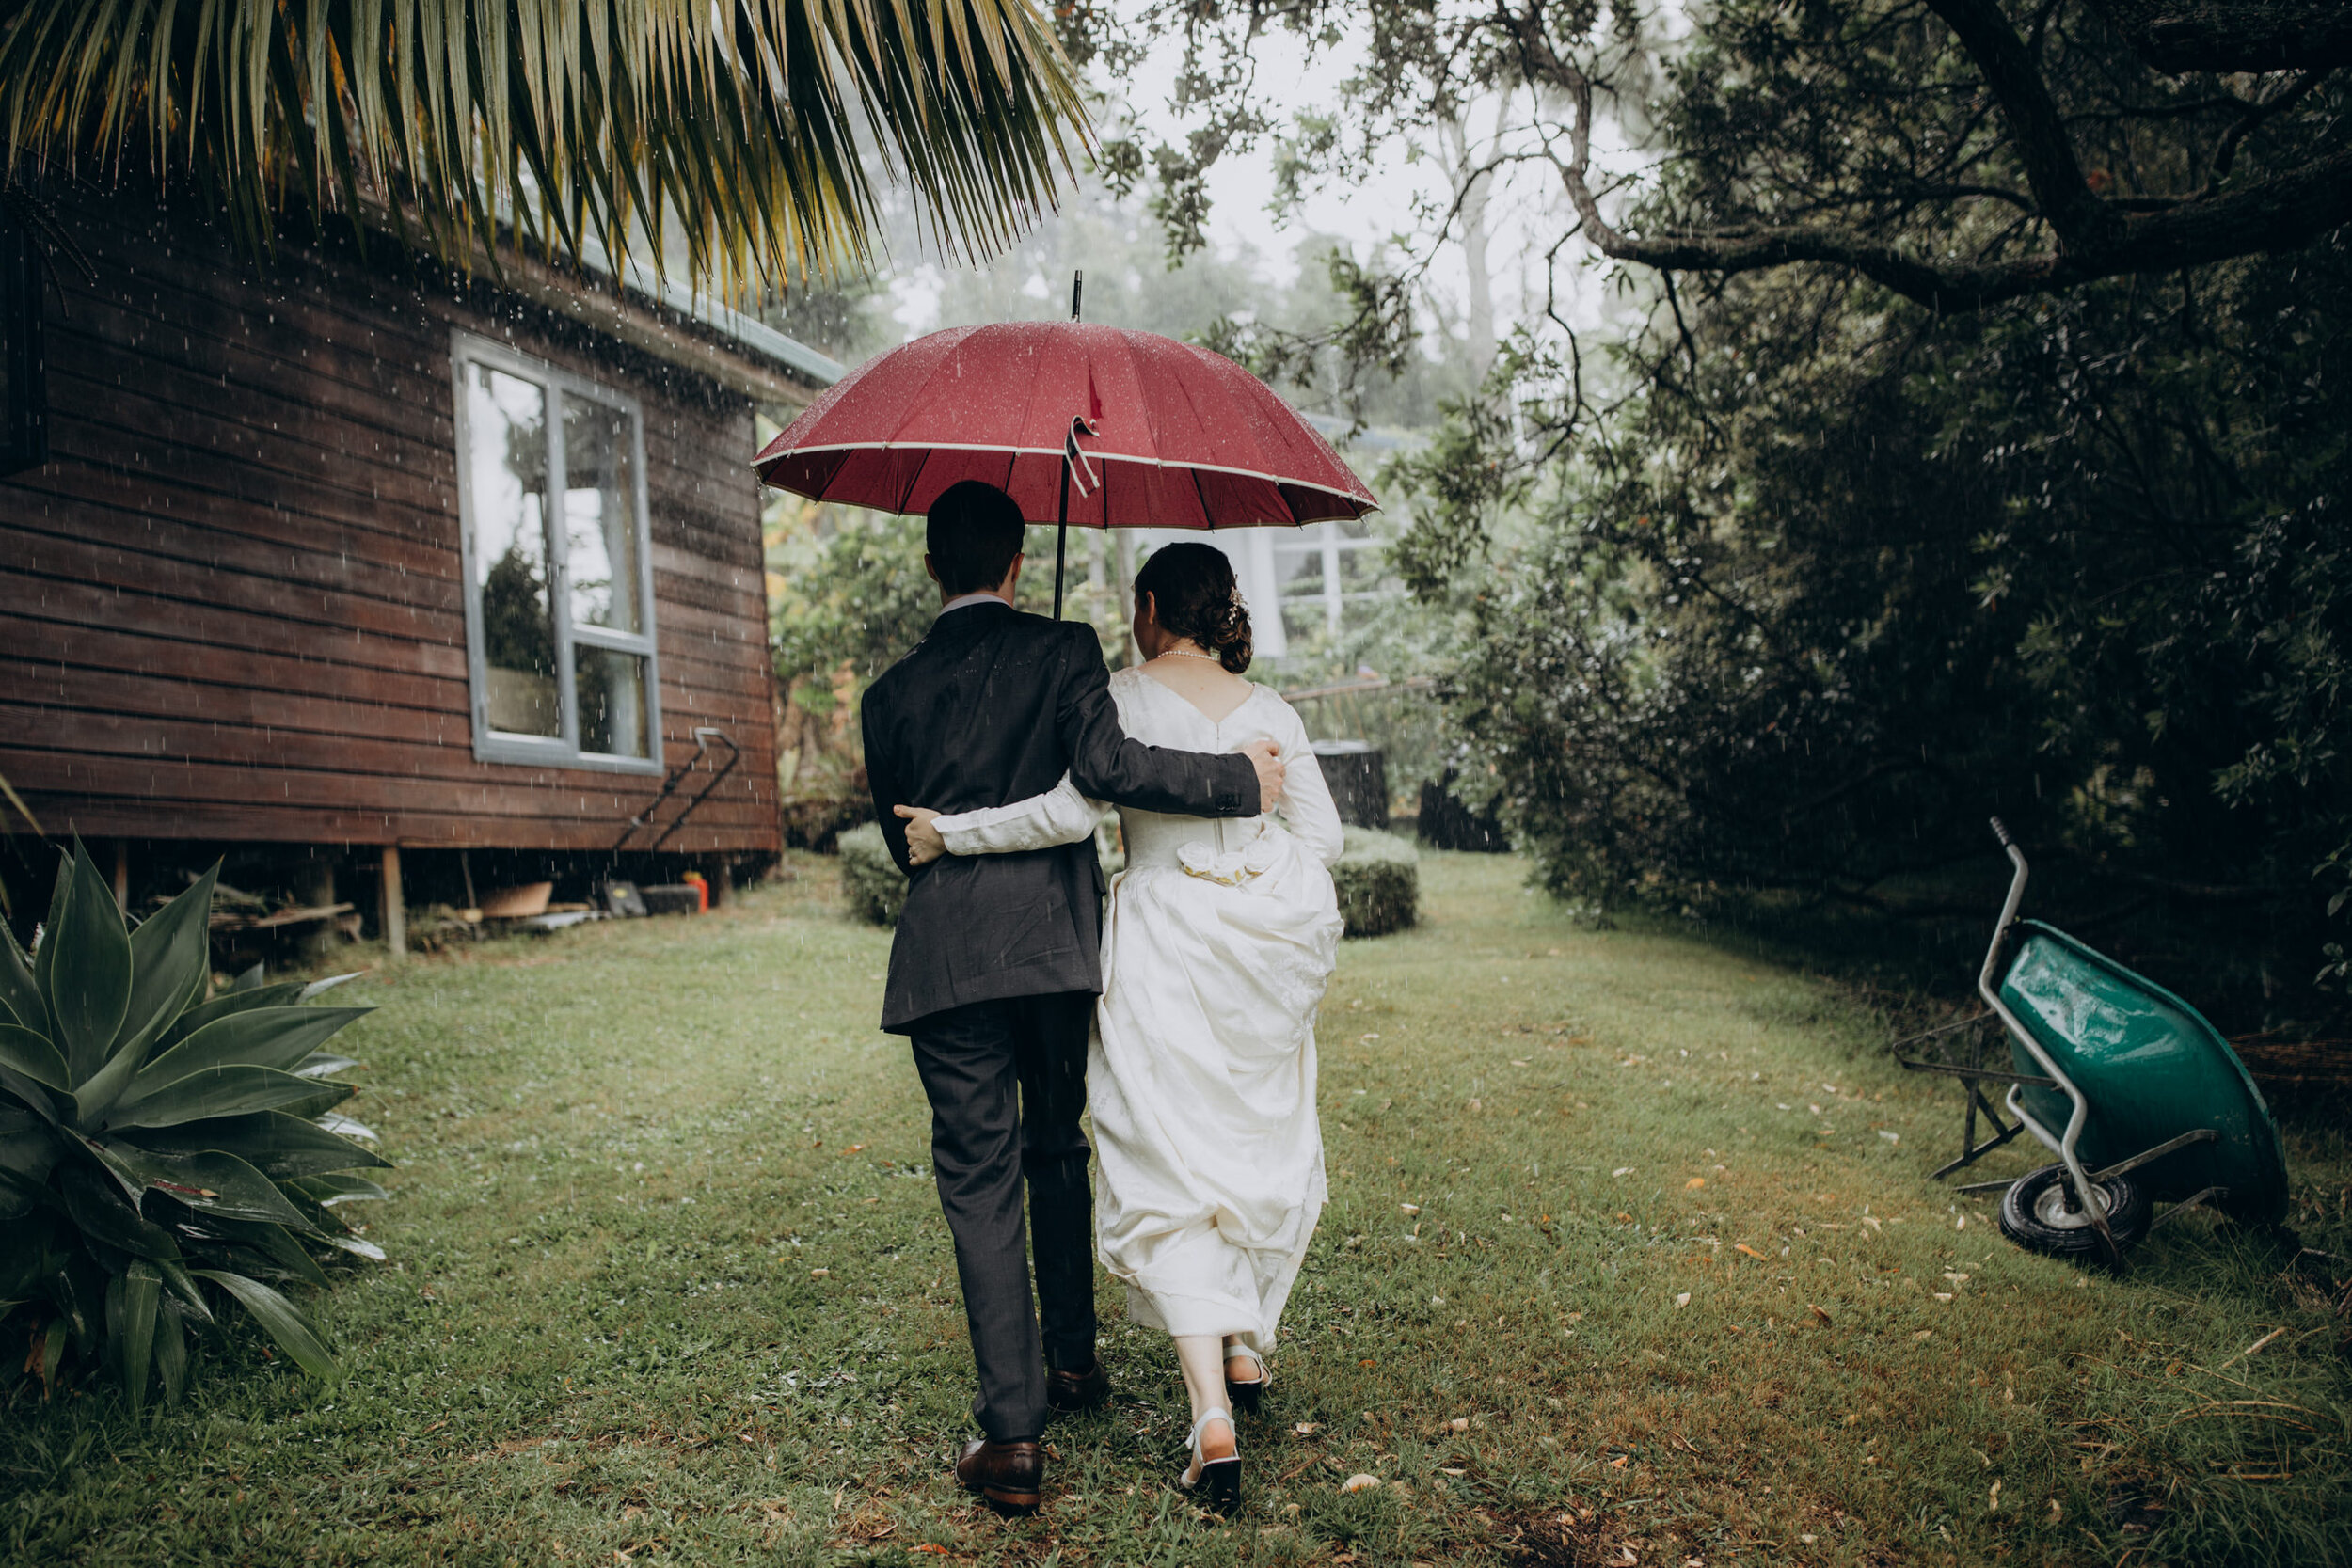 Rainy day wedding photos |  New Zealand pre wedding photography | Wanting Huang Photography | Urban wedding | intimate wedding | wedding with small budget | affordable wedding photographer in New Zeal